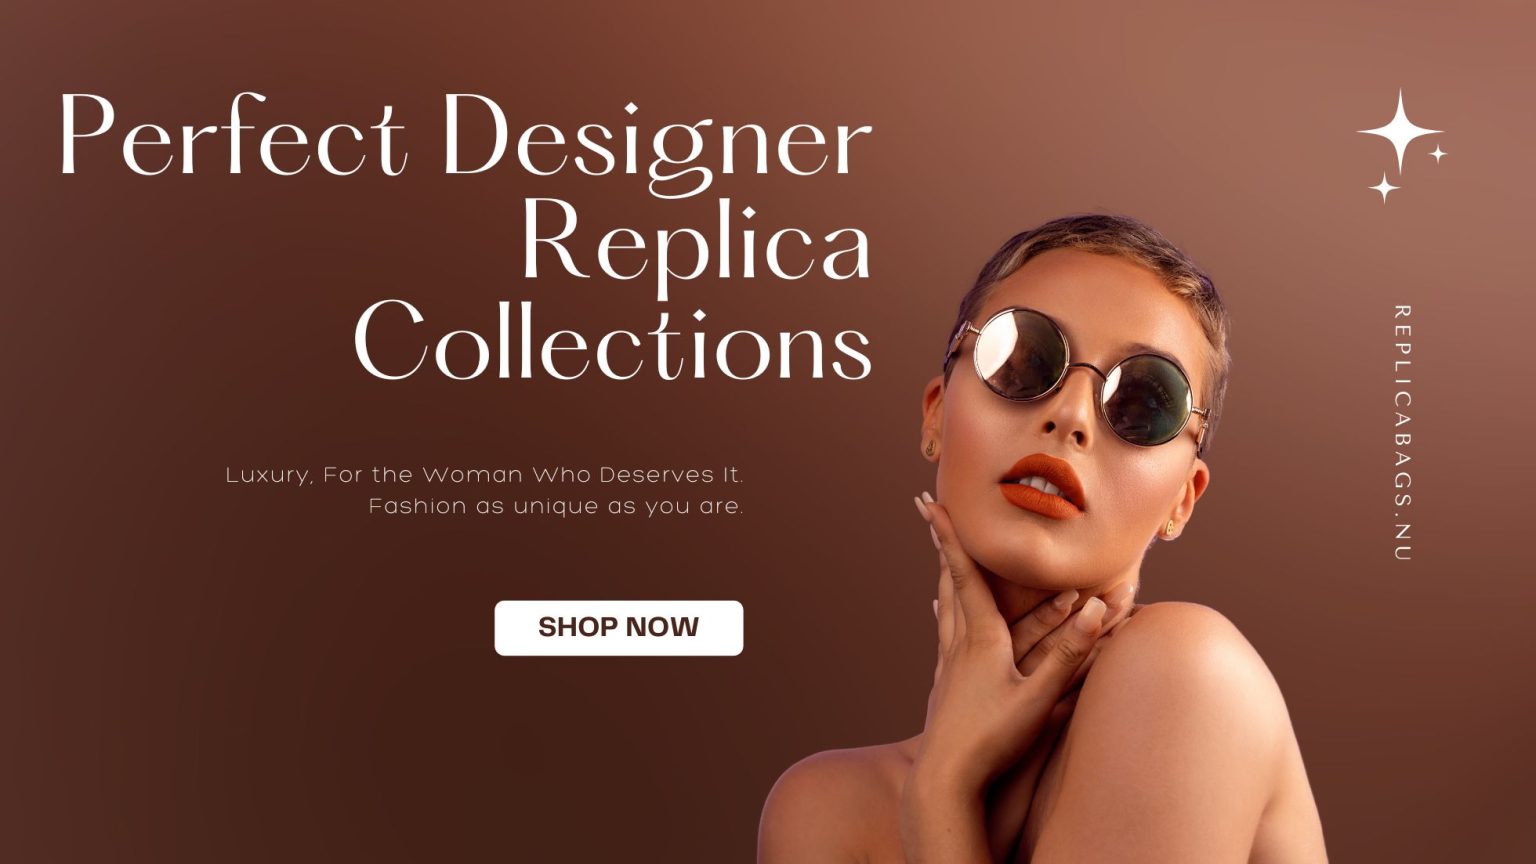 Perfect Designer Replica collections